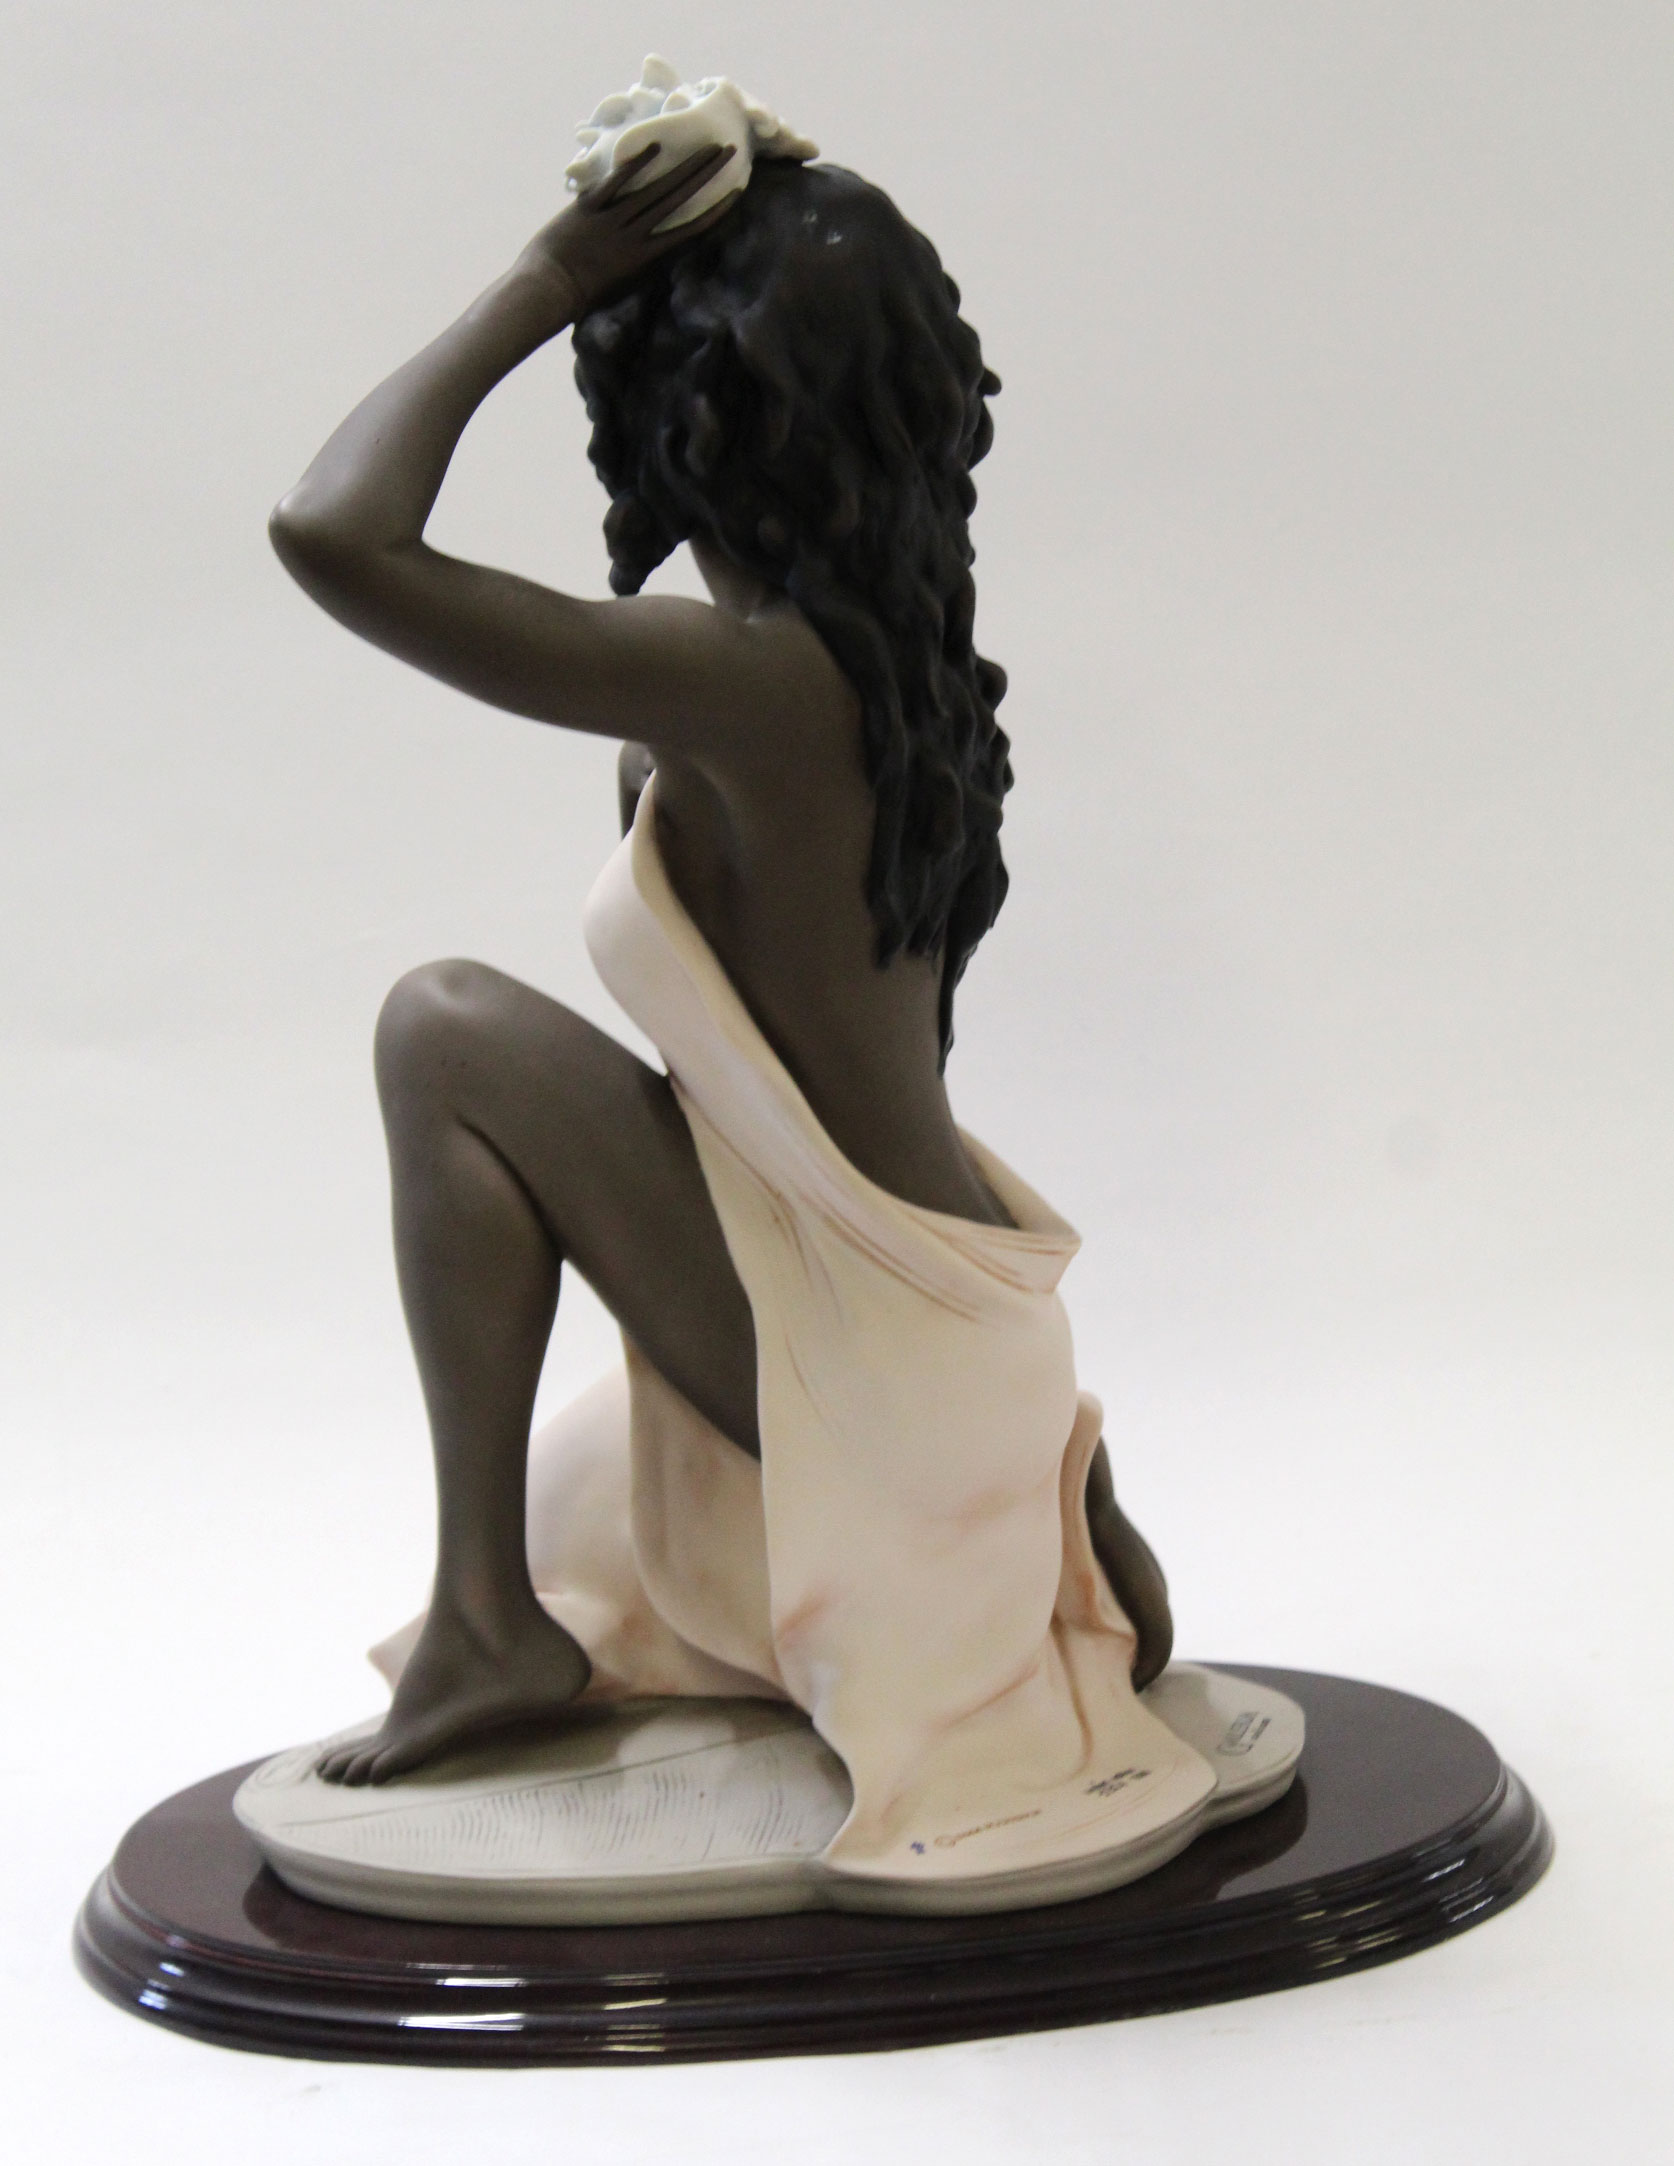 Galleria, Florence Studio, limited edition, (190/1500) ceramic figure, "F Taui", 49cm high - Image 4 of 6